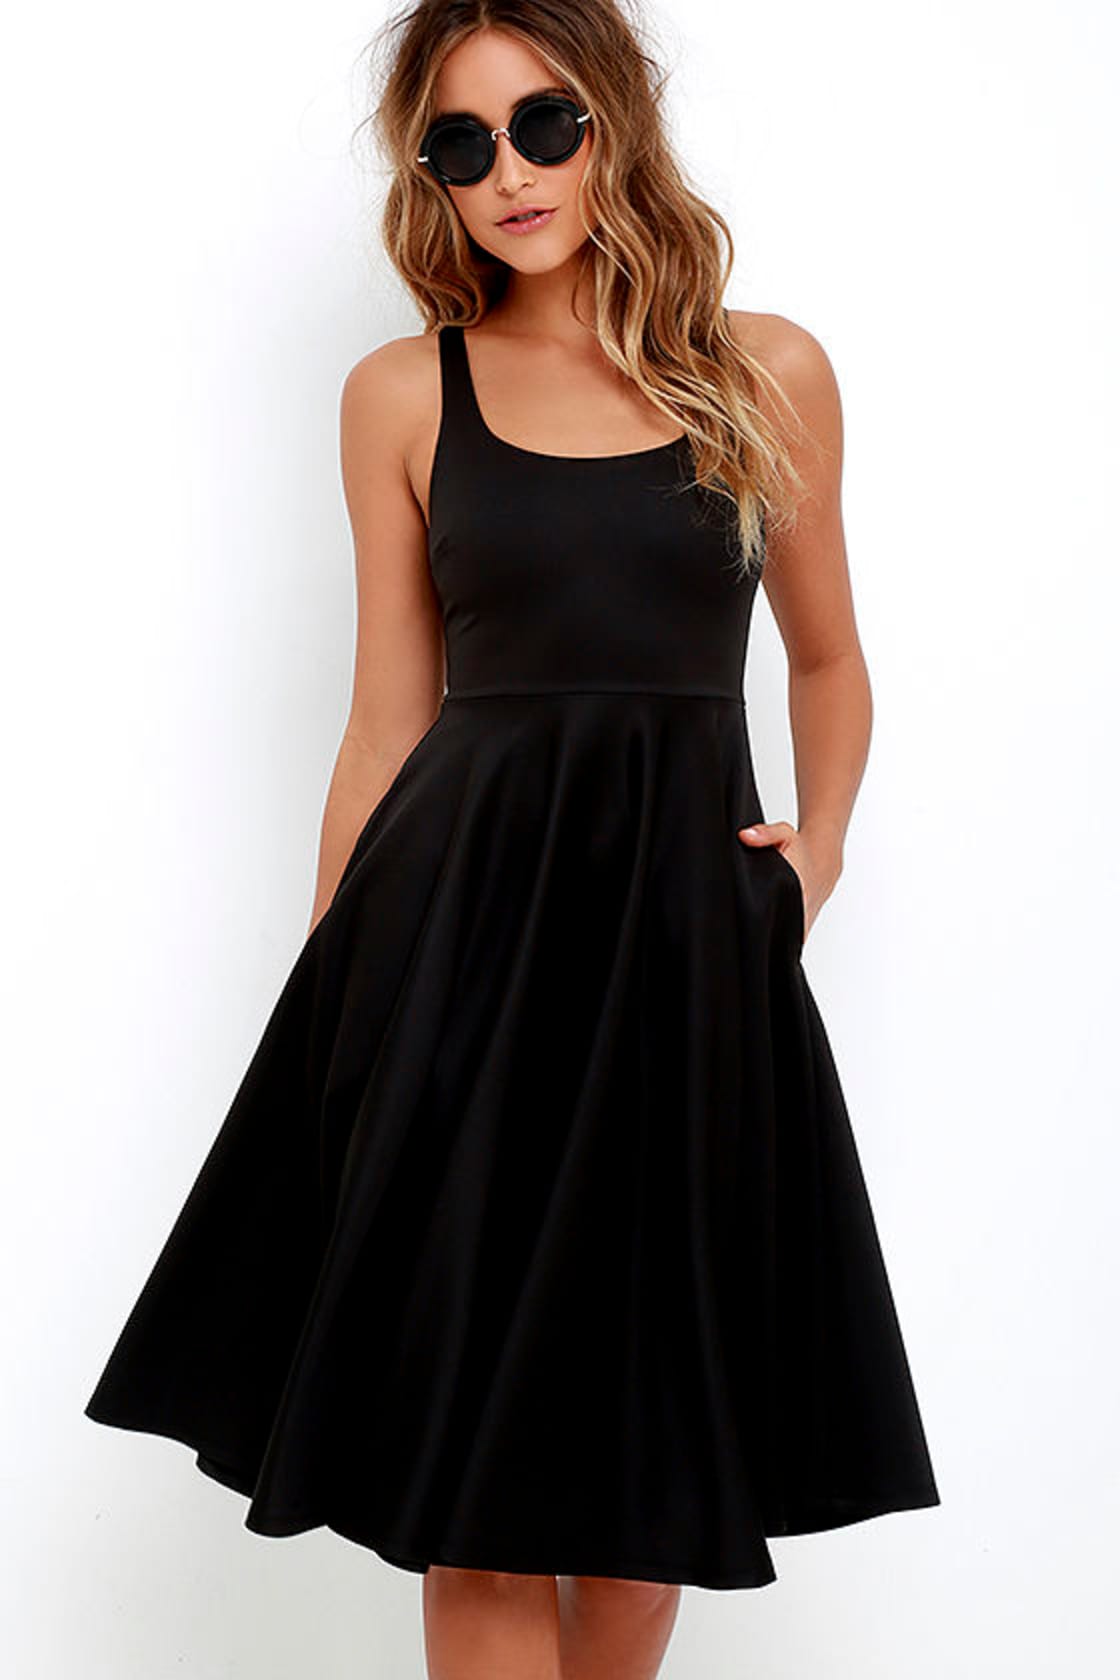 Lovely Black Dress - Midi Dress - Fit-and-Flare Dress - $55.00 - Lulus